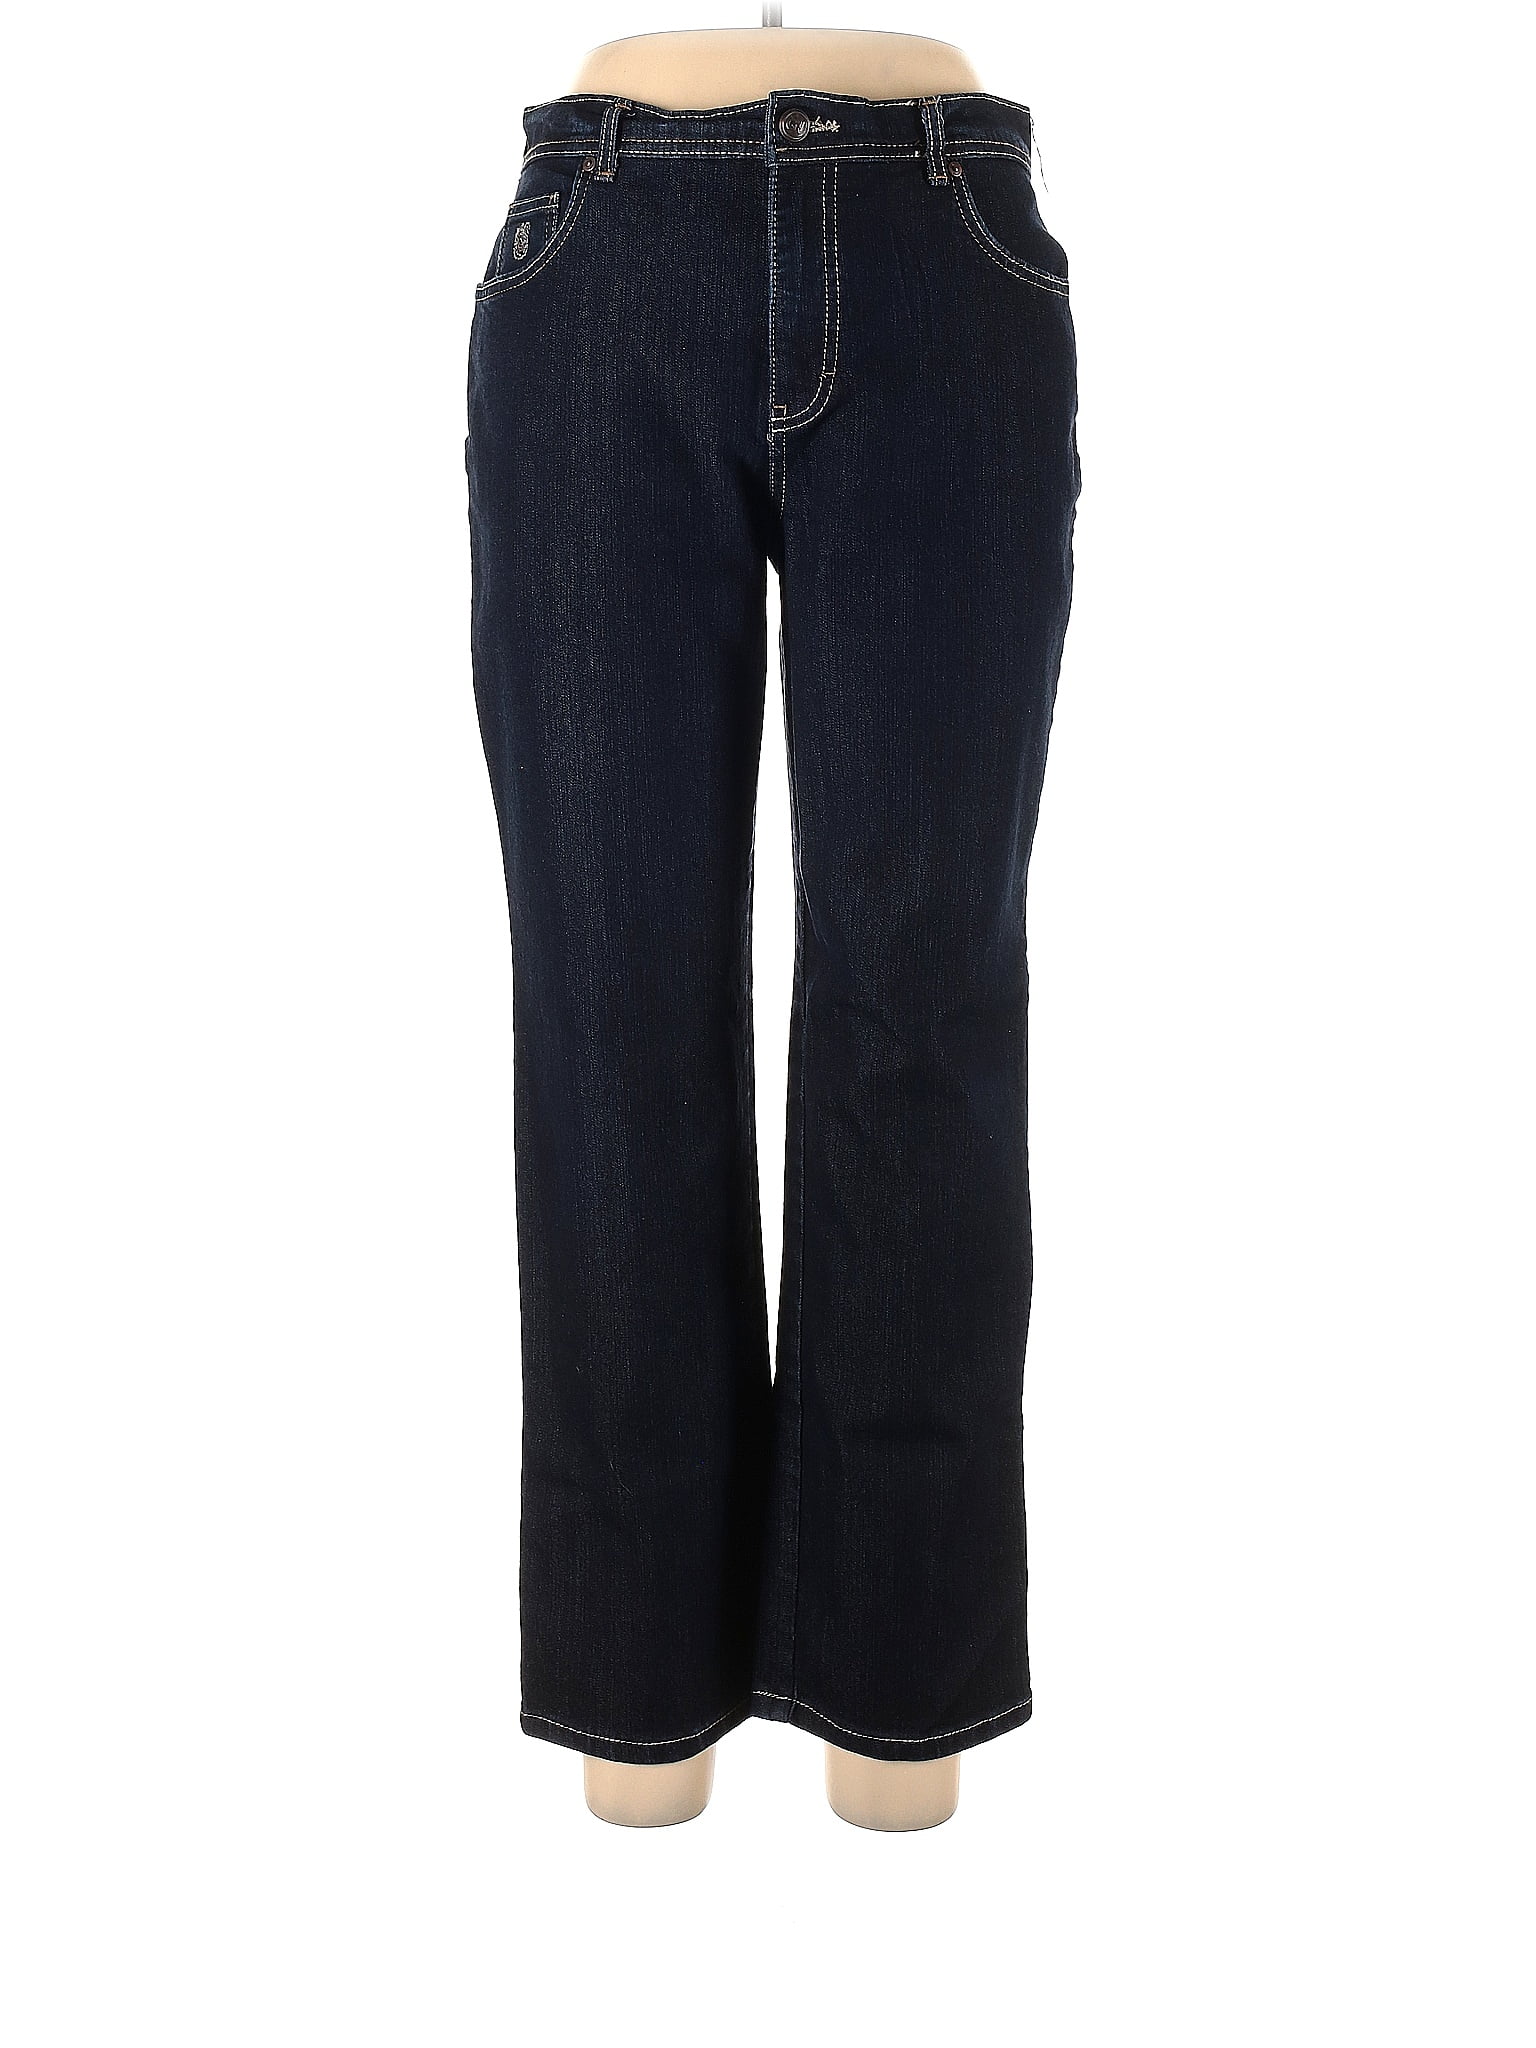 Gloria Vanderbilt Black Jeans Size 12 - 62% off | thredUP